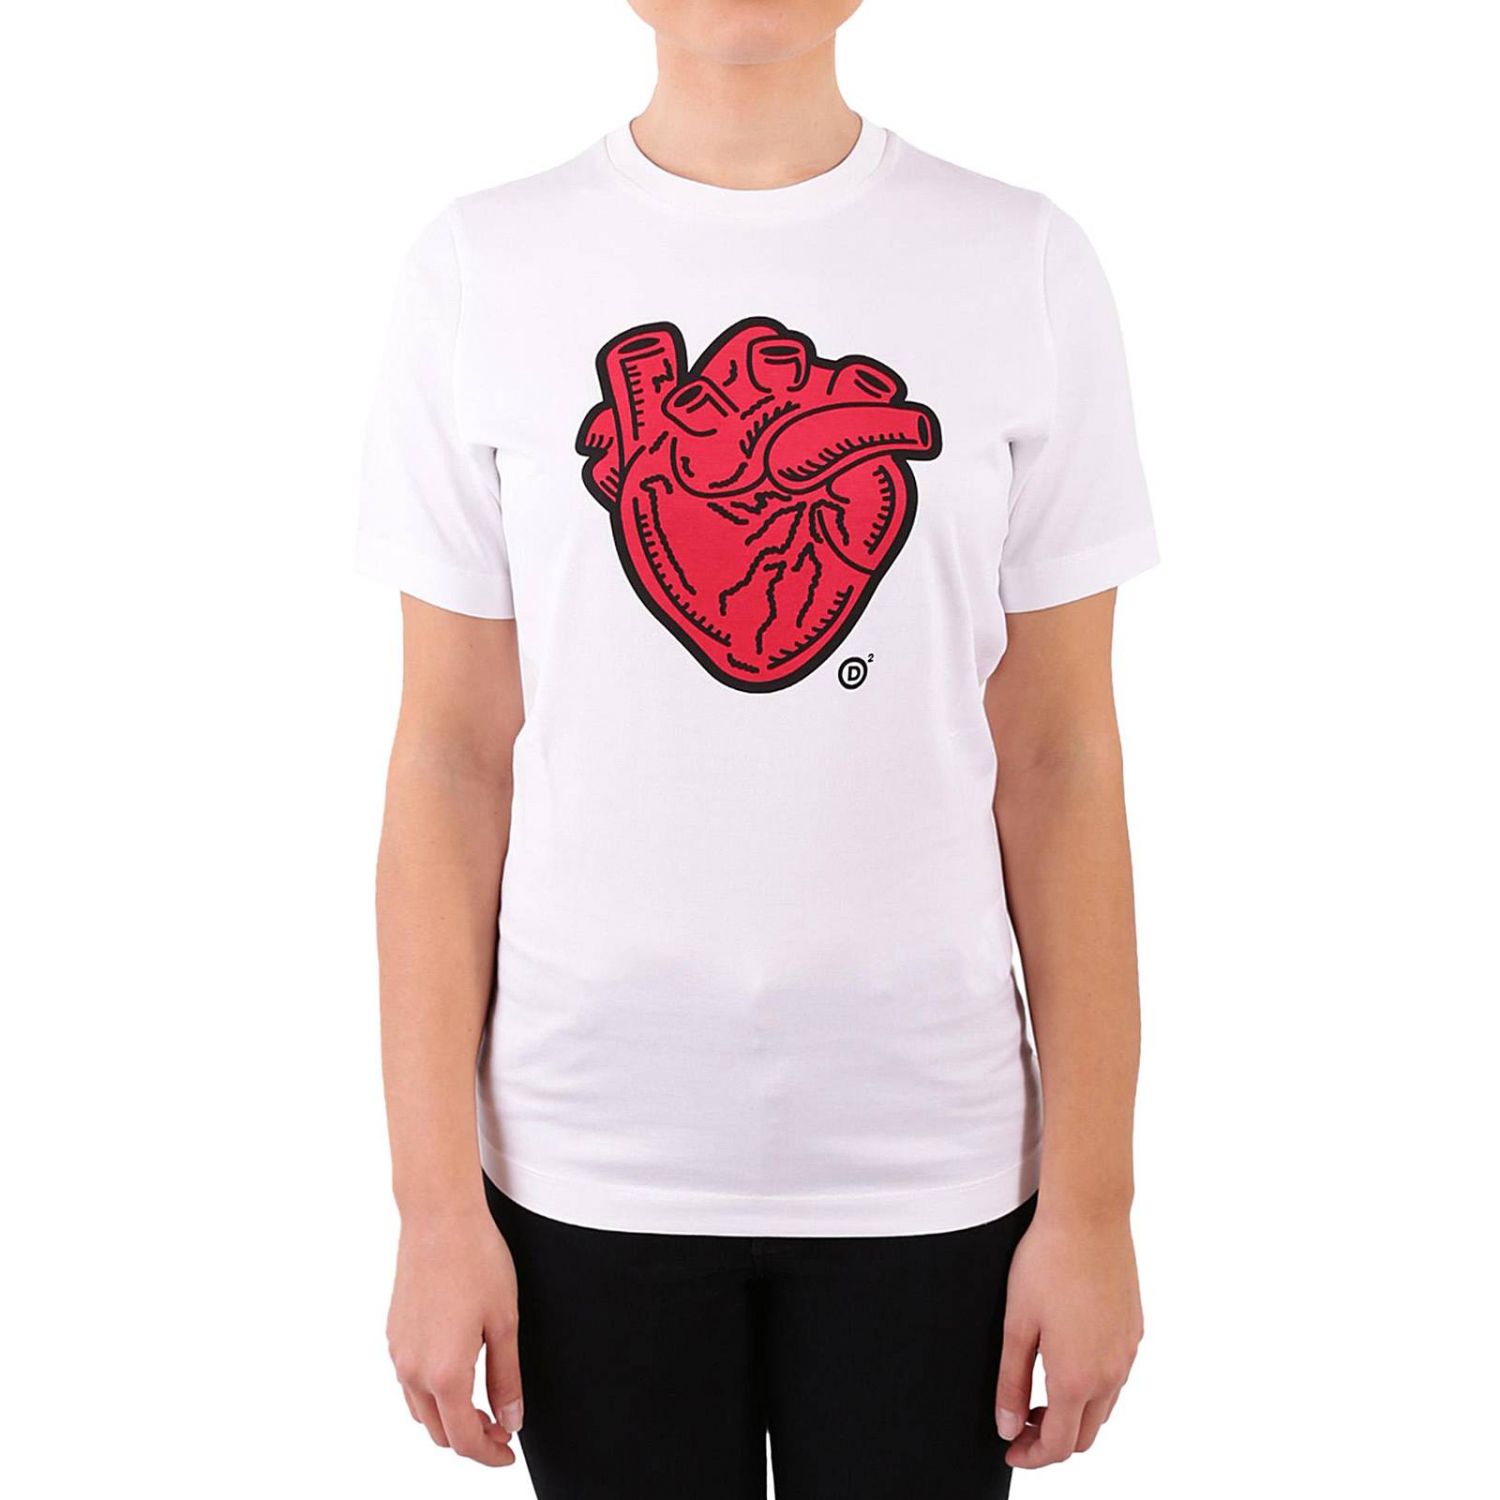 Сердце og. Футболка с сердечком. Футболка с сердечком с глазами. Мерч футболки с сердцем. Рубашка с сердцем.